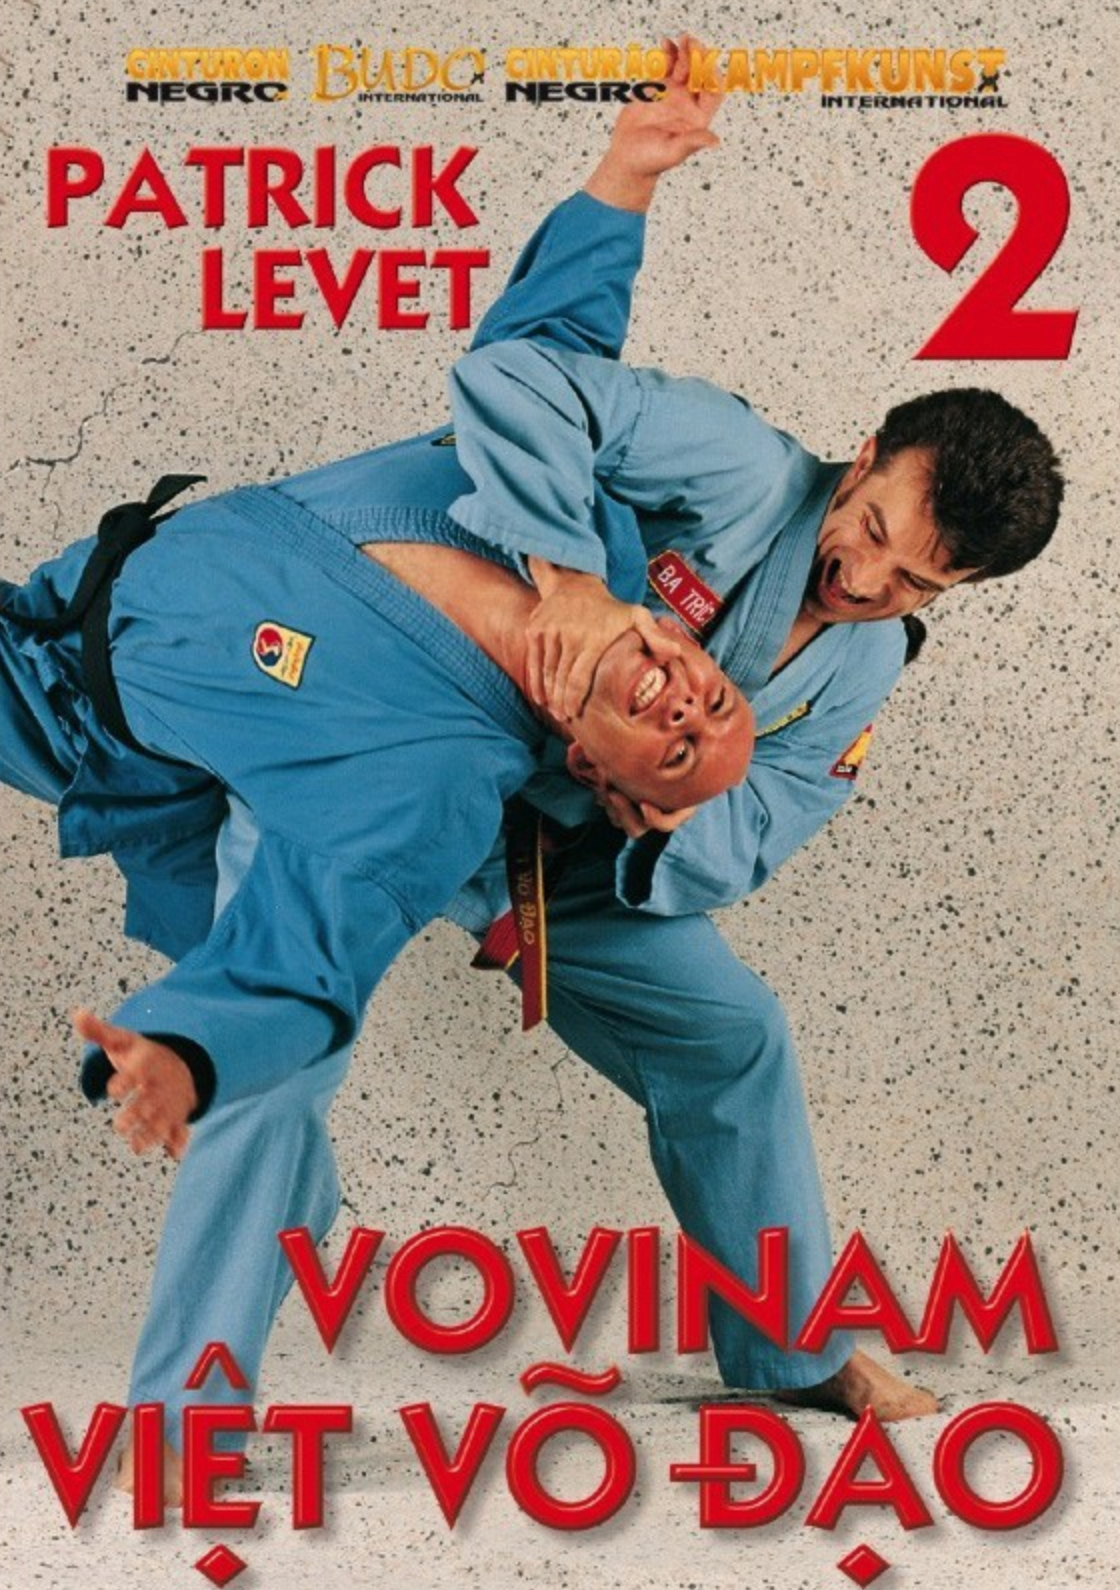 Vovinam Viet Vo Dao Vol 2 DVD with Patrick Levet - Budovideos Inc